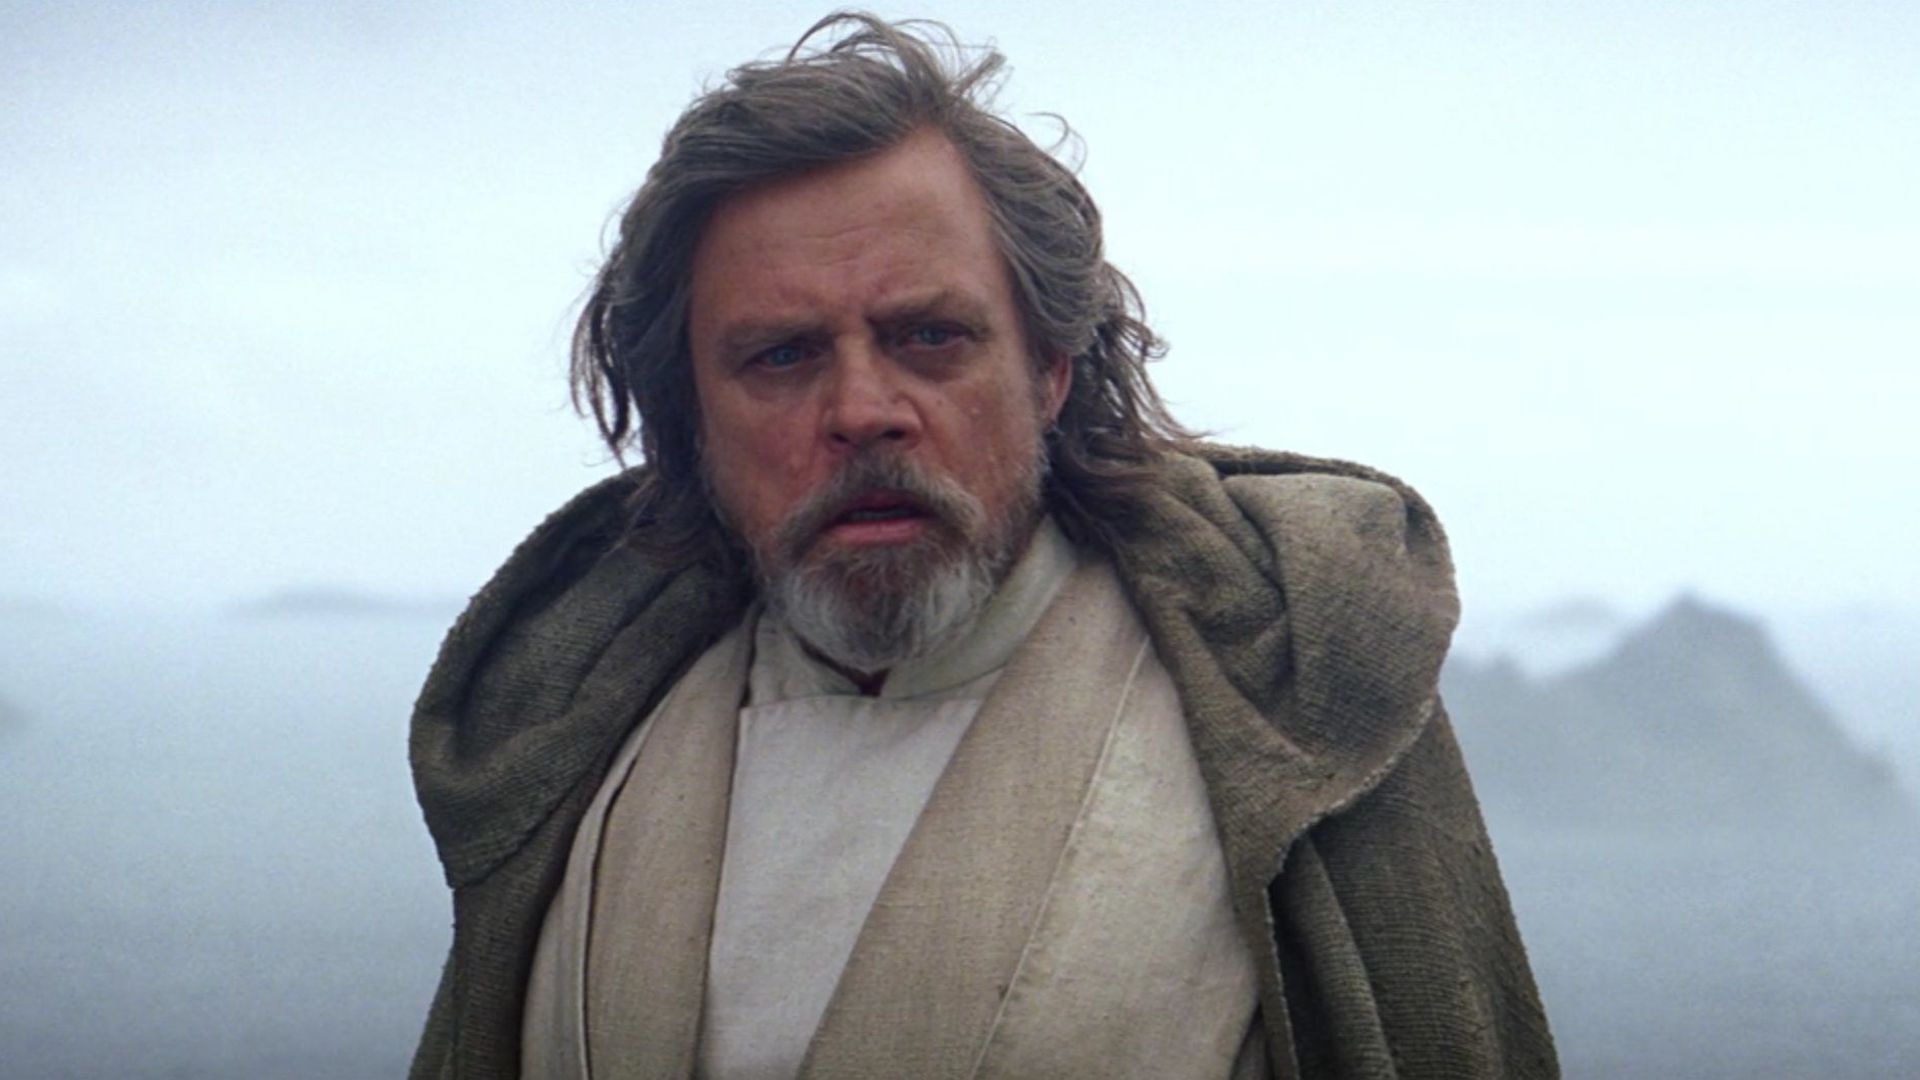 Luke in Star Wars: The Force Awakens